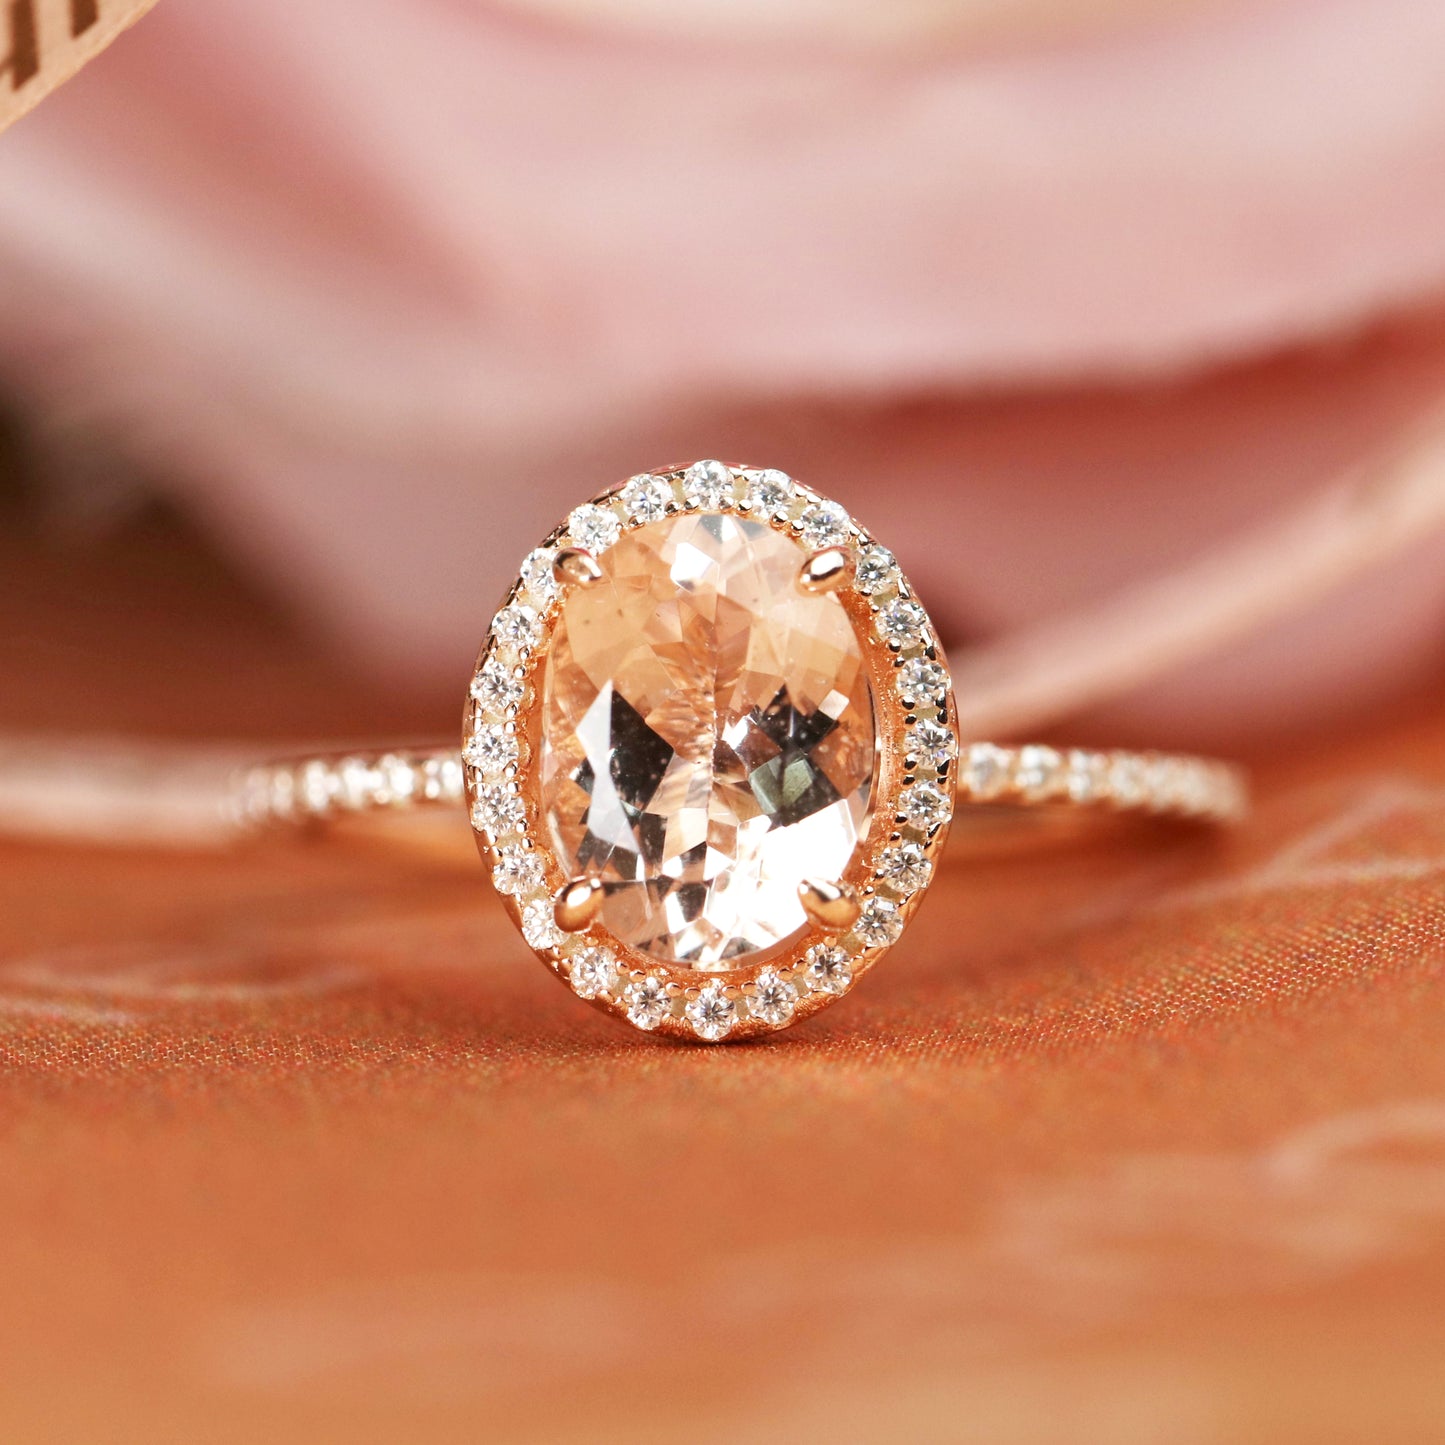 Sale Popular 1.5 carat peach pink Morganite with Diamond Halo Wedding Engagement Ring for Women